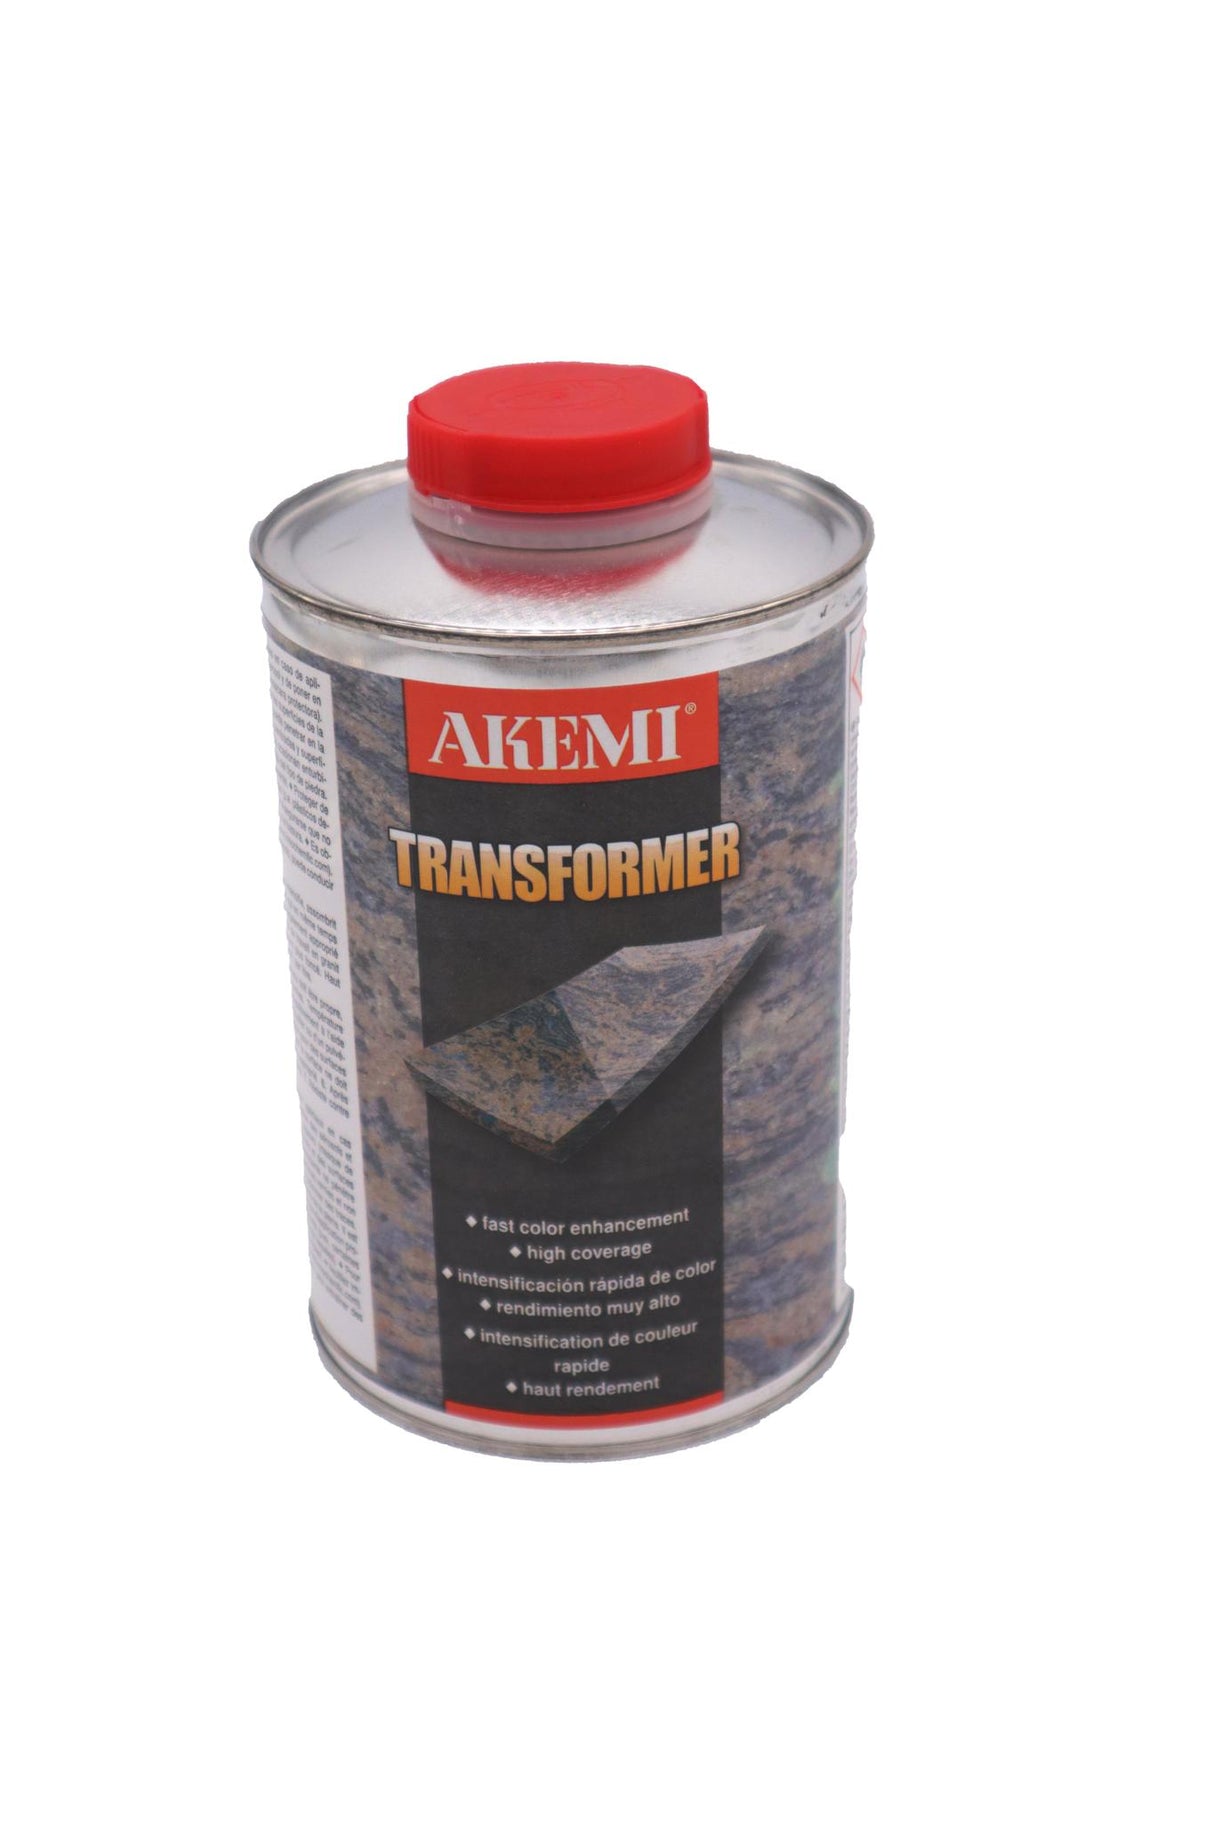 Akemi Transformer